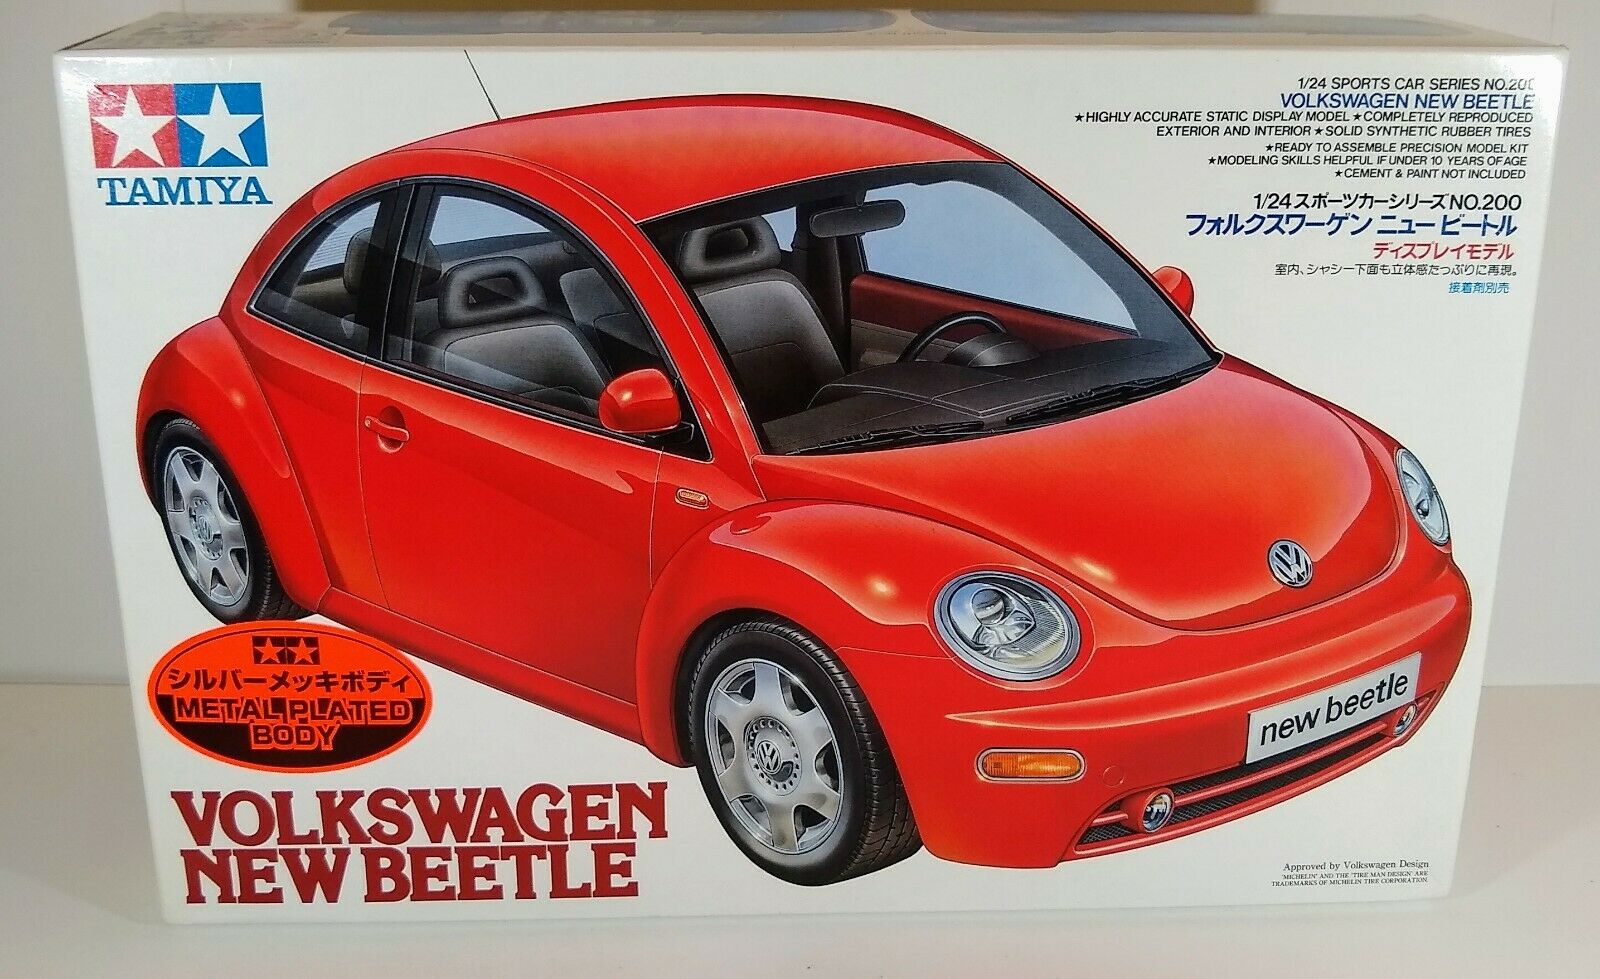 TAMIYA 89593 1/24 Volkswagen New Beetle (metal plated body)